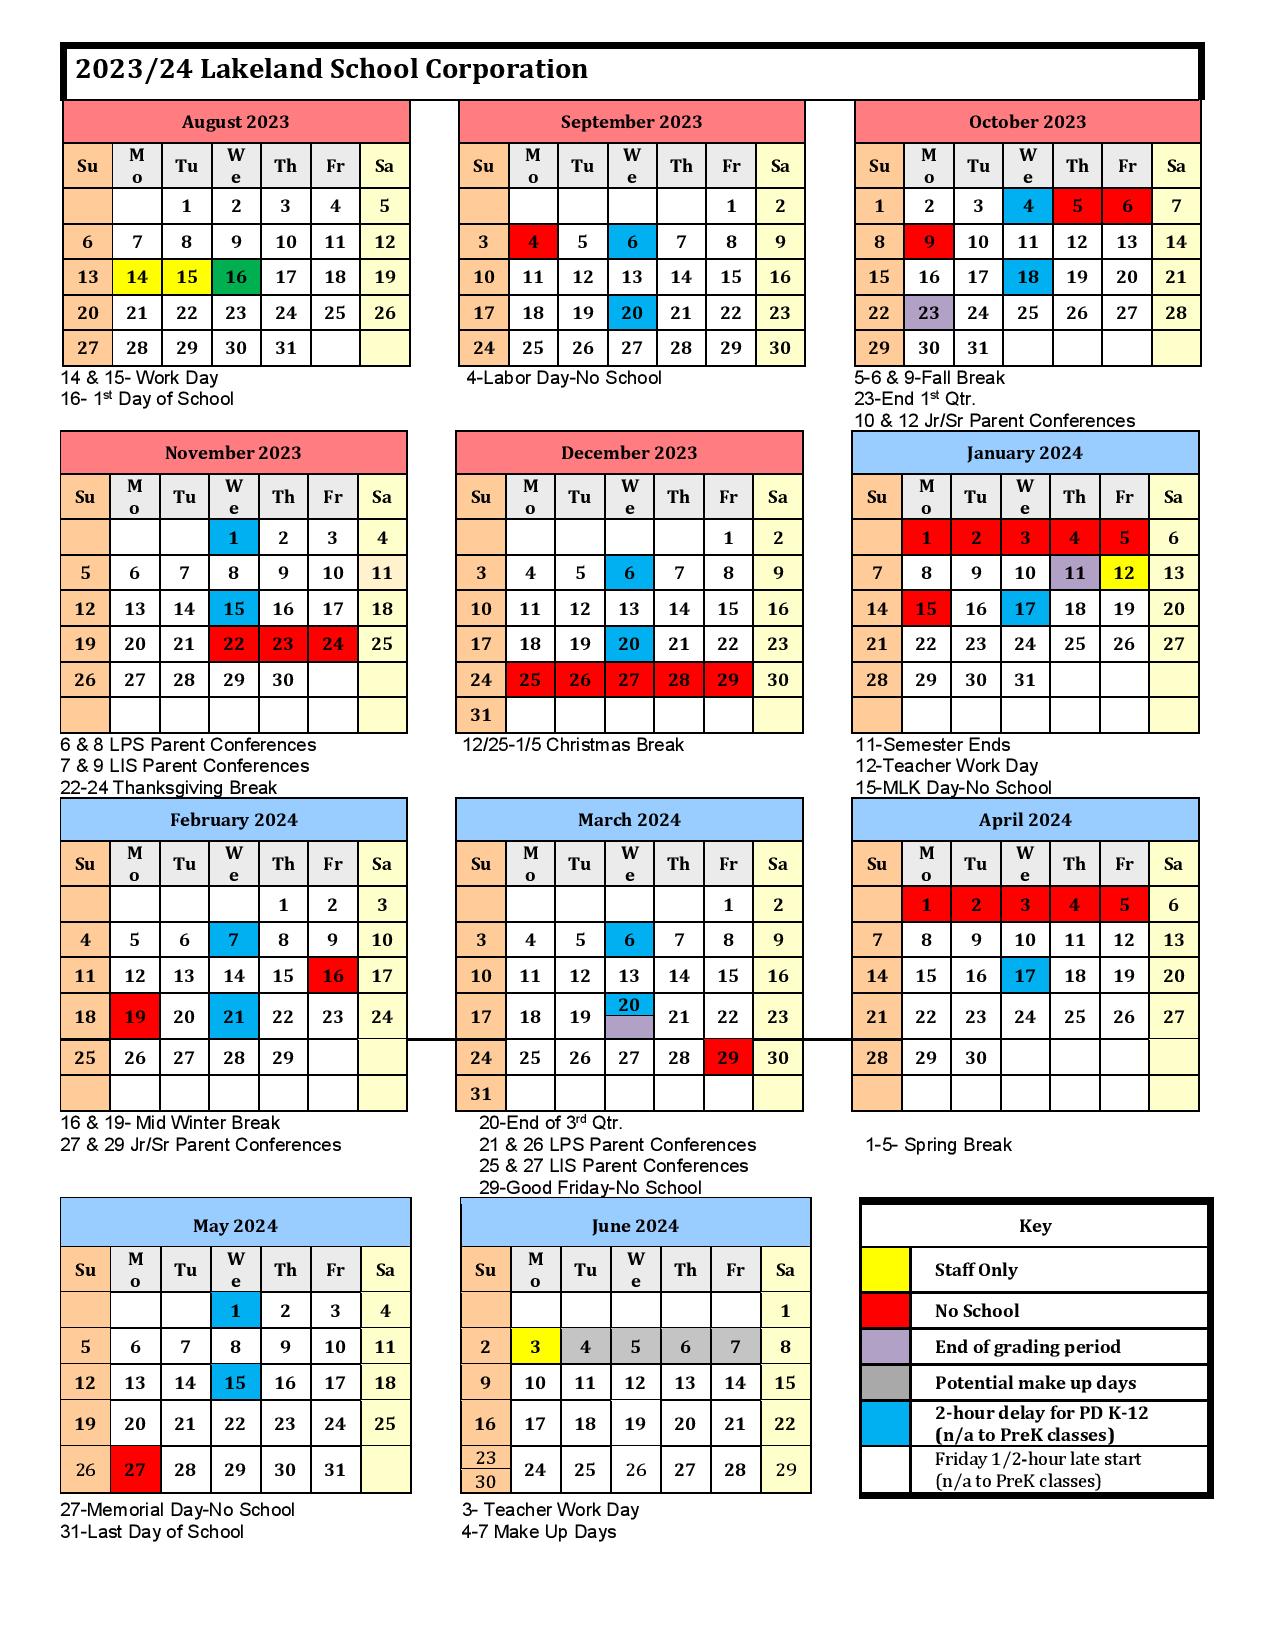 calendar-lakeland-school-corporation